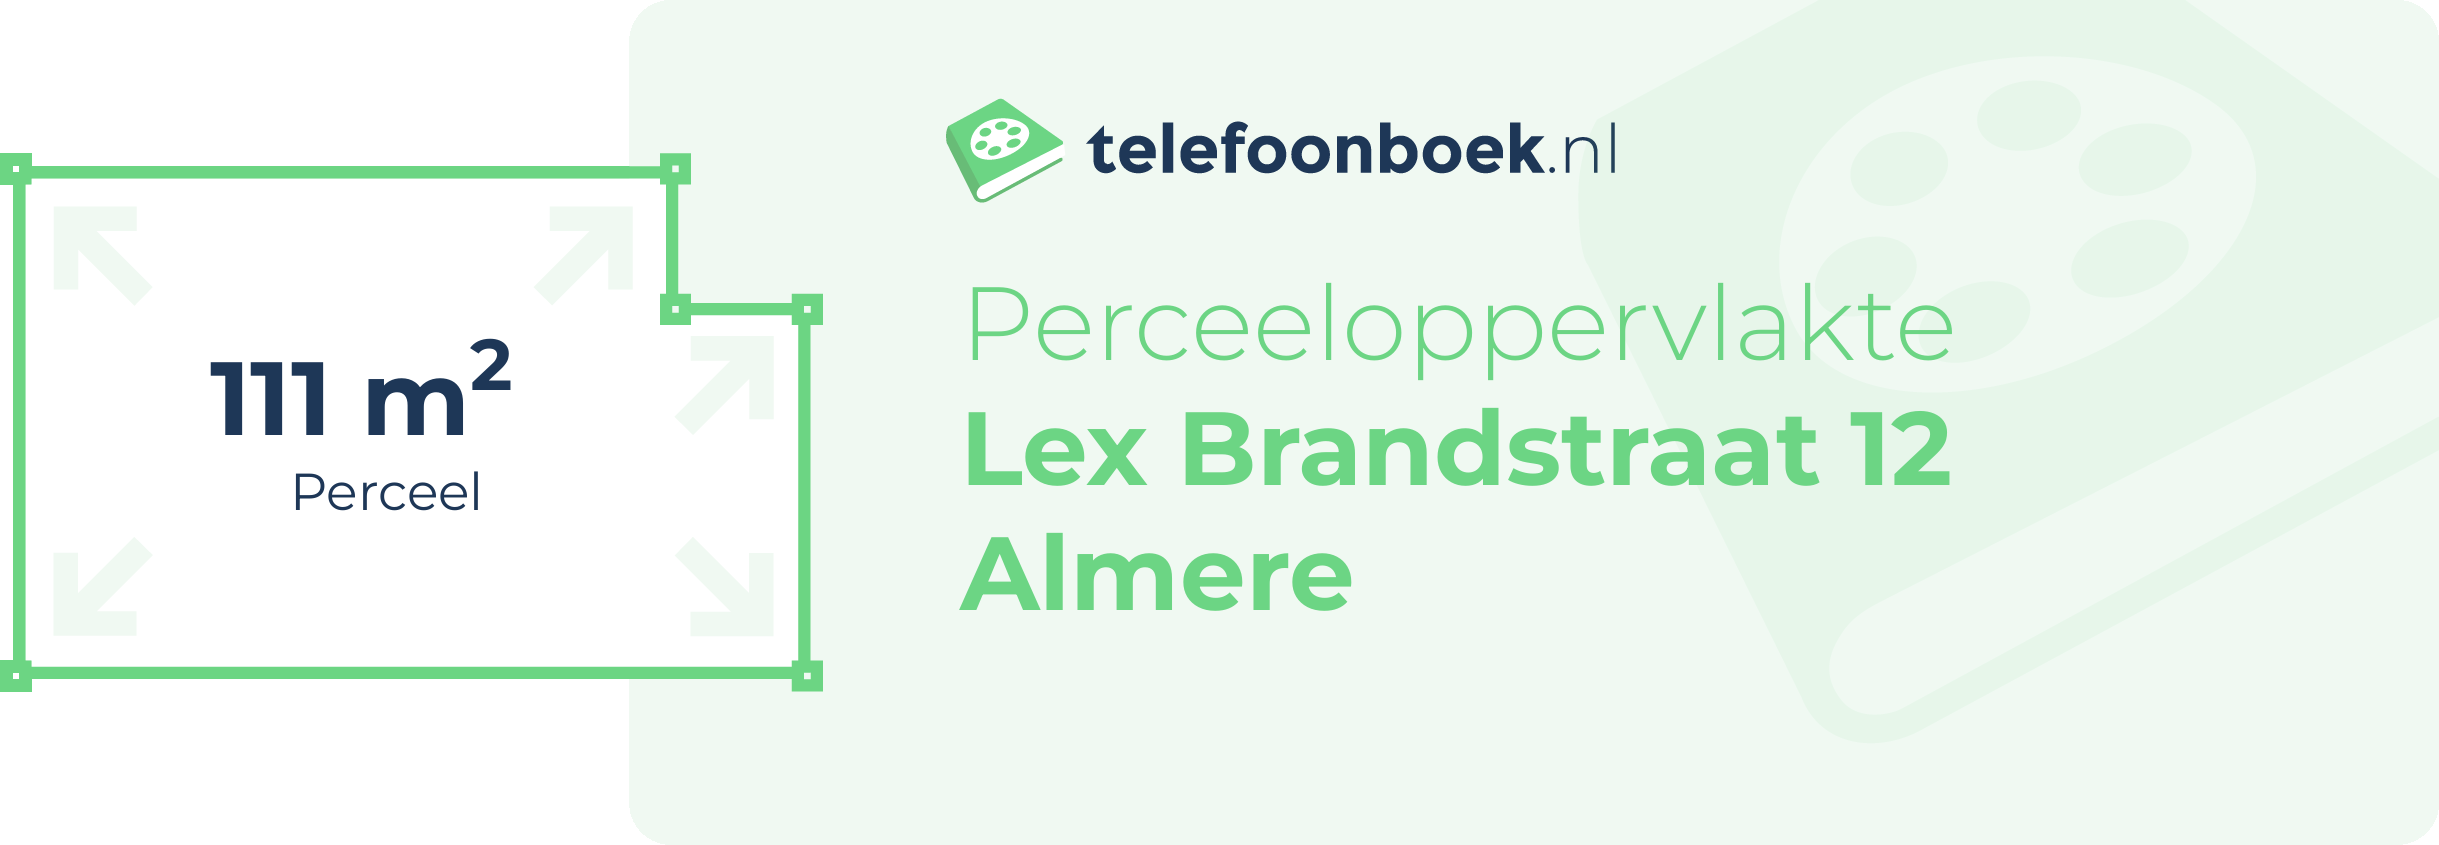 Perceeloppervlakte Lex Brandstraat 12 Almere